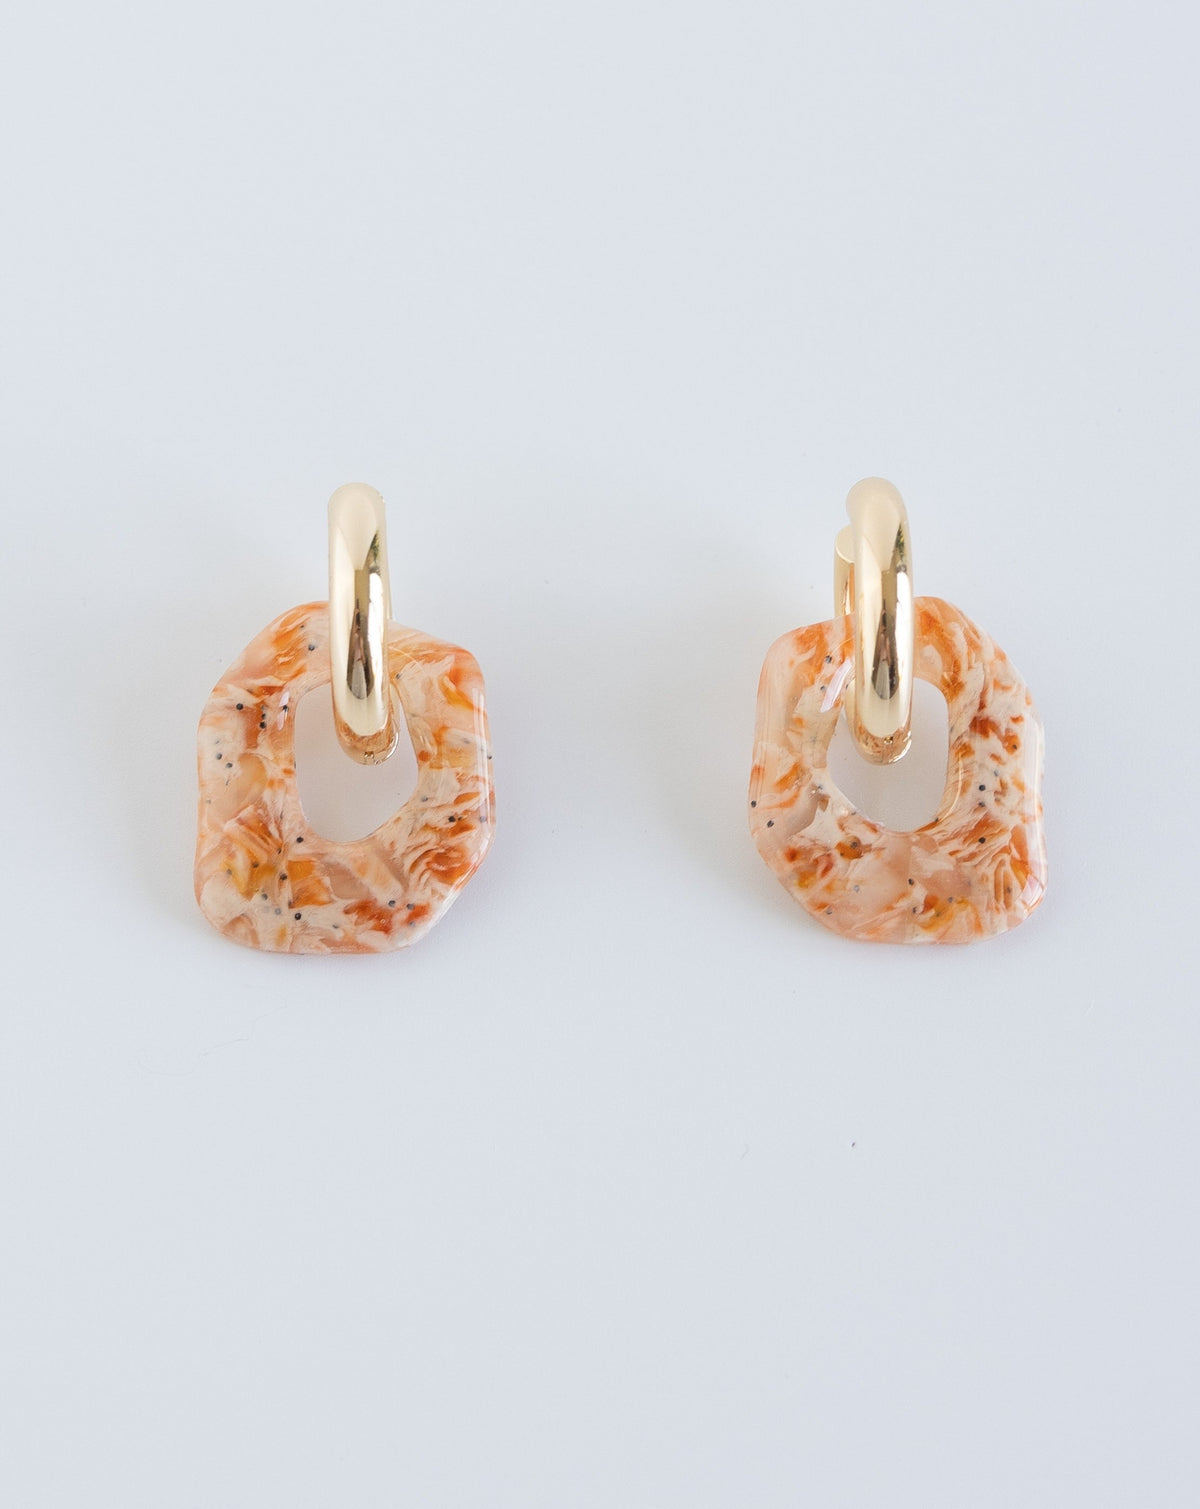 Darien earrings in Marble orange pattern with gold hoops, front view